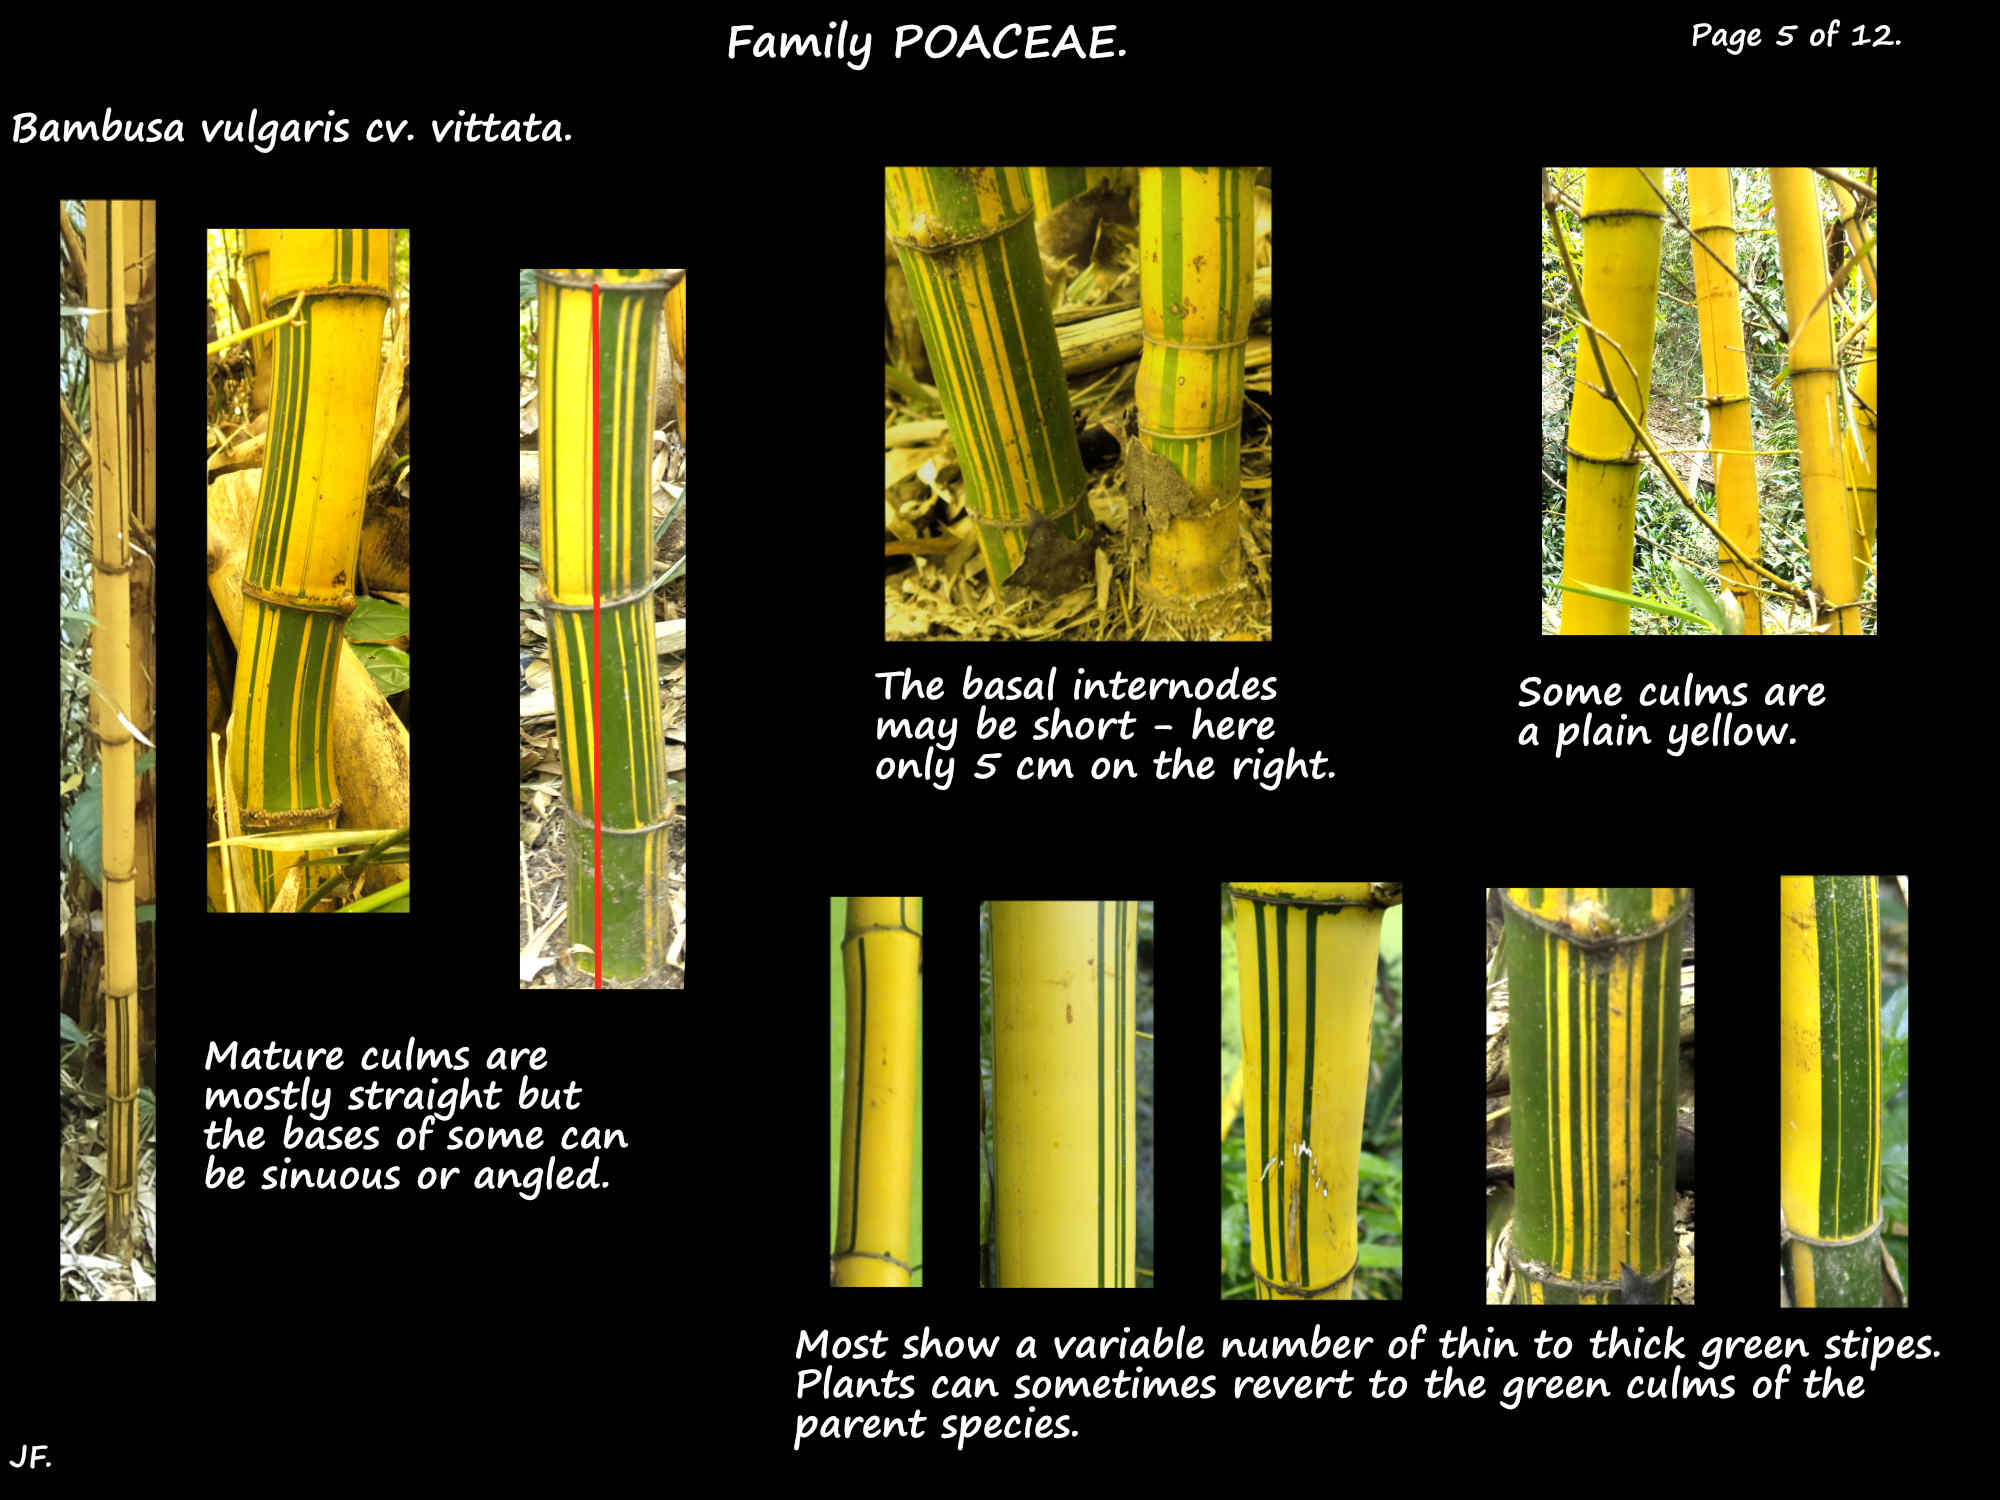 5 Bambusa vulgaris cv. vittata mature culms